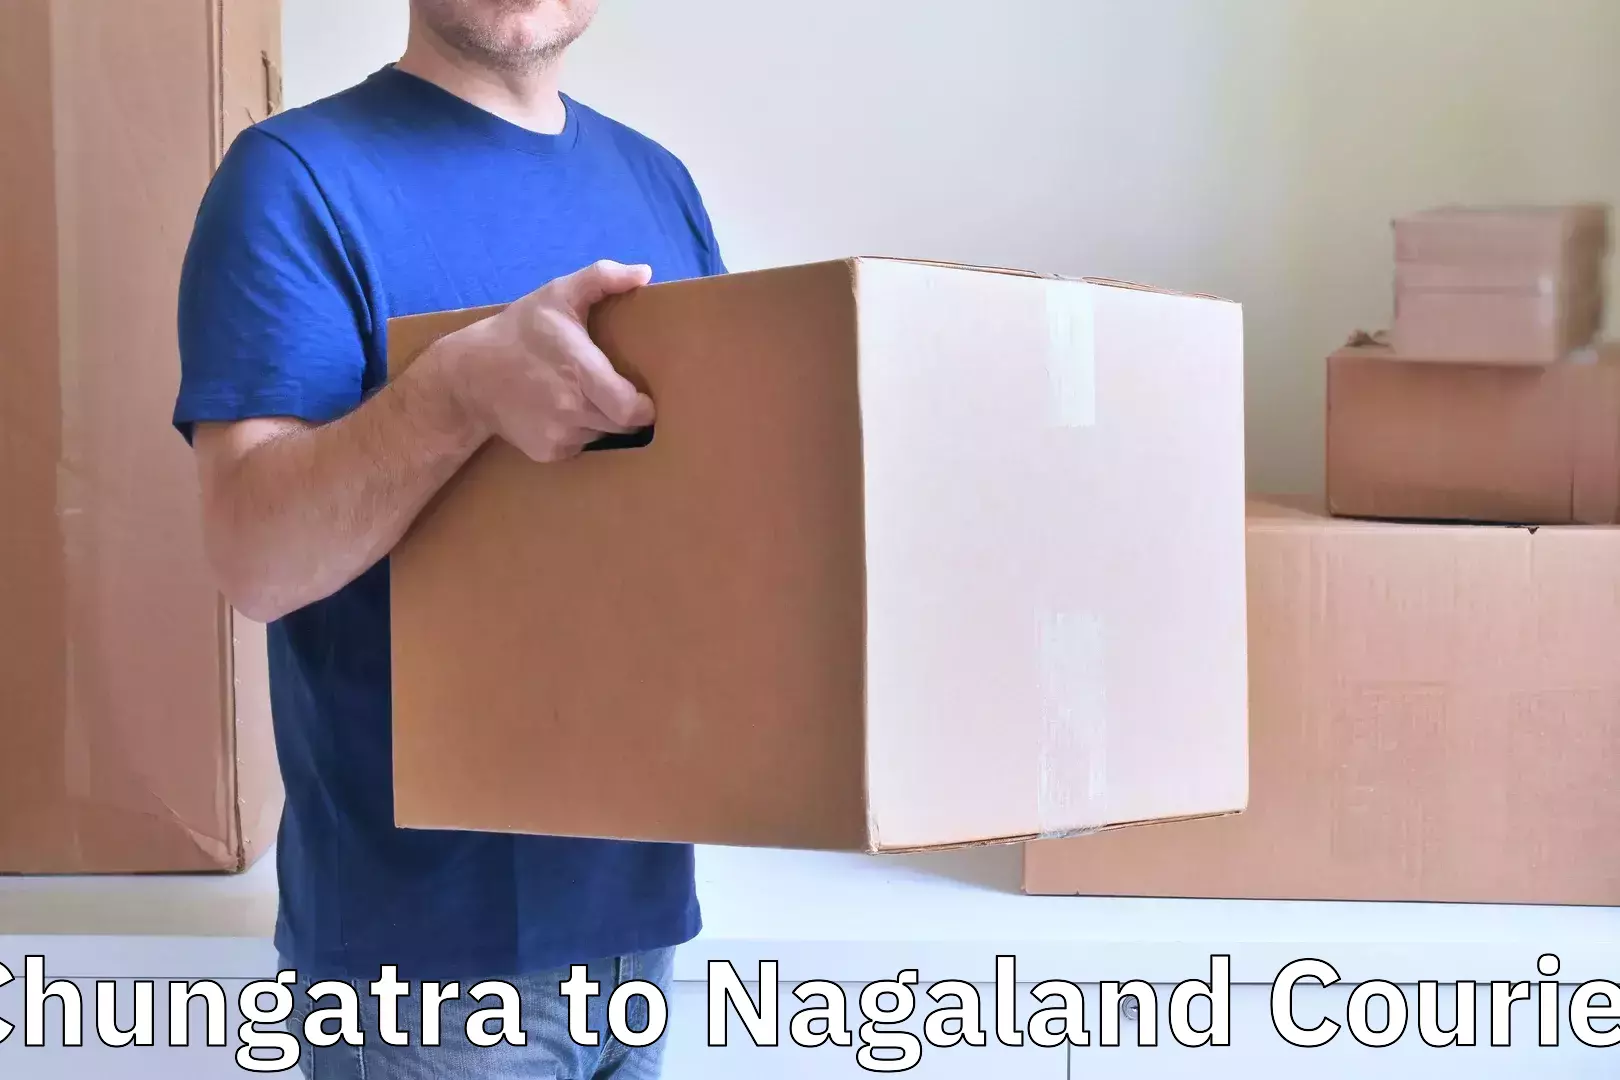 Luggage transport company Chungatra to Nagaland